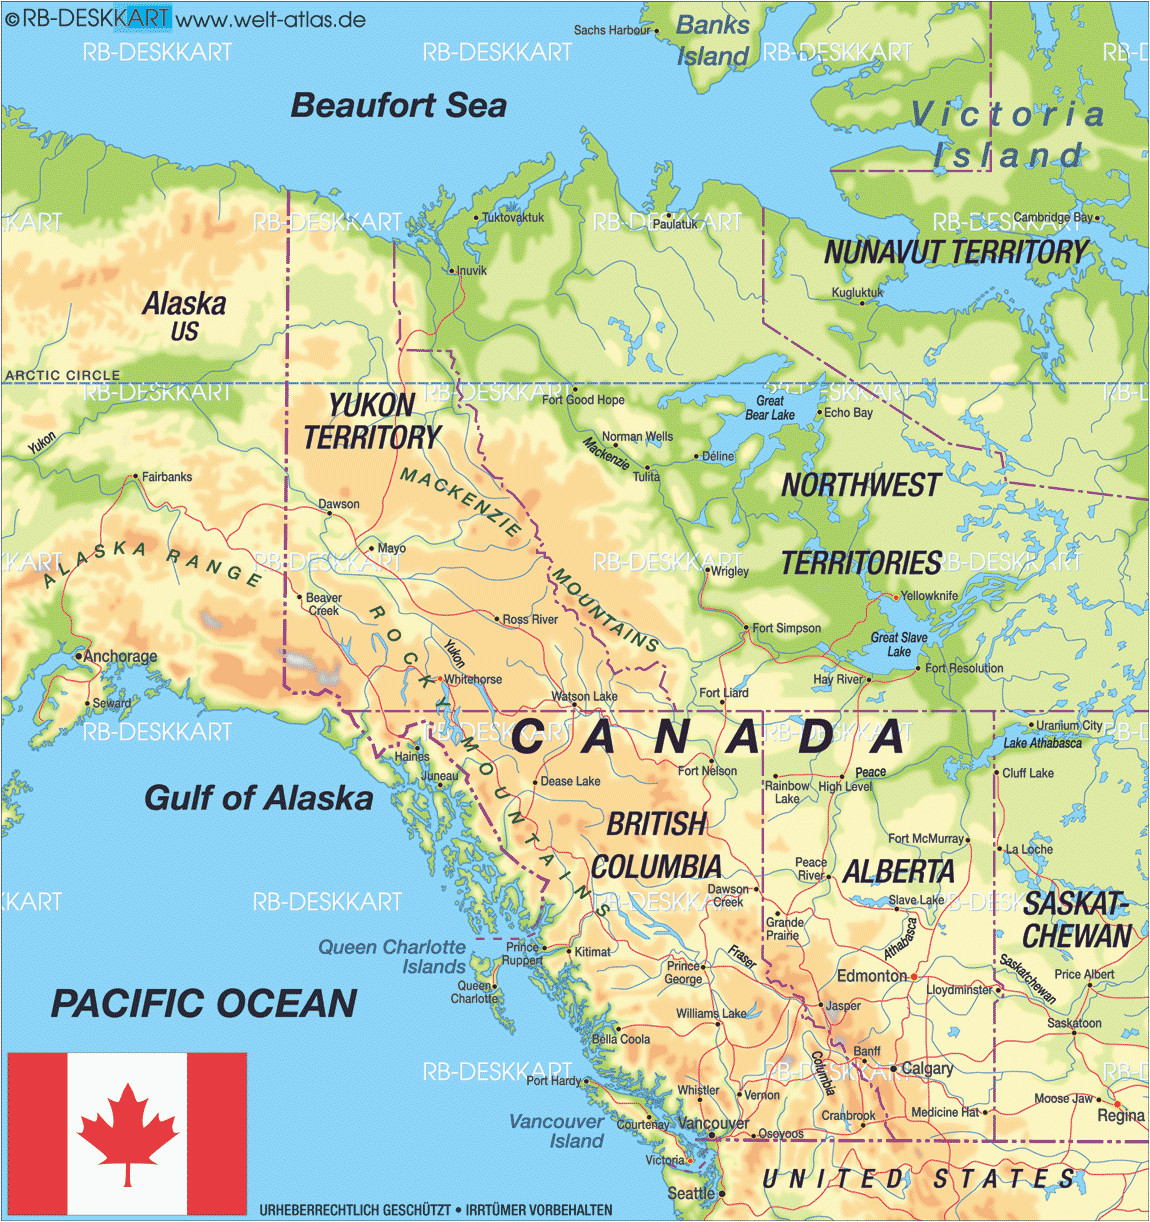 Maps Of Western Canada Map Of Canada West Region In Canada Welt atlas De